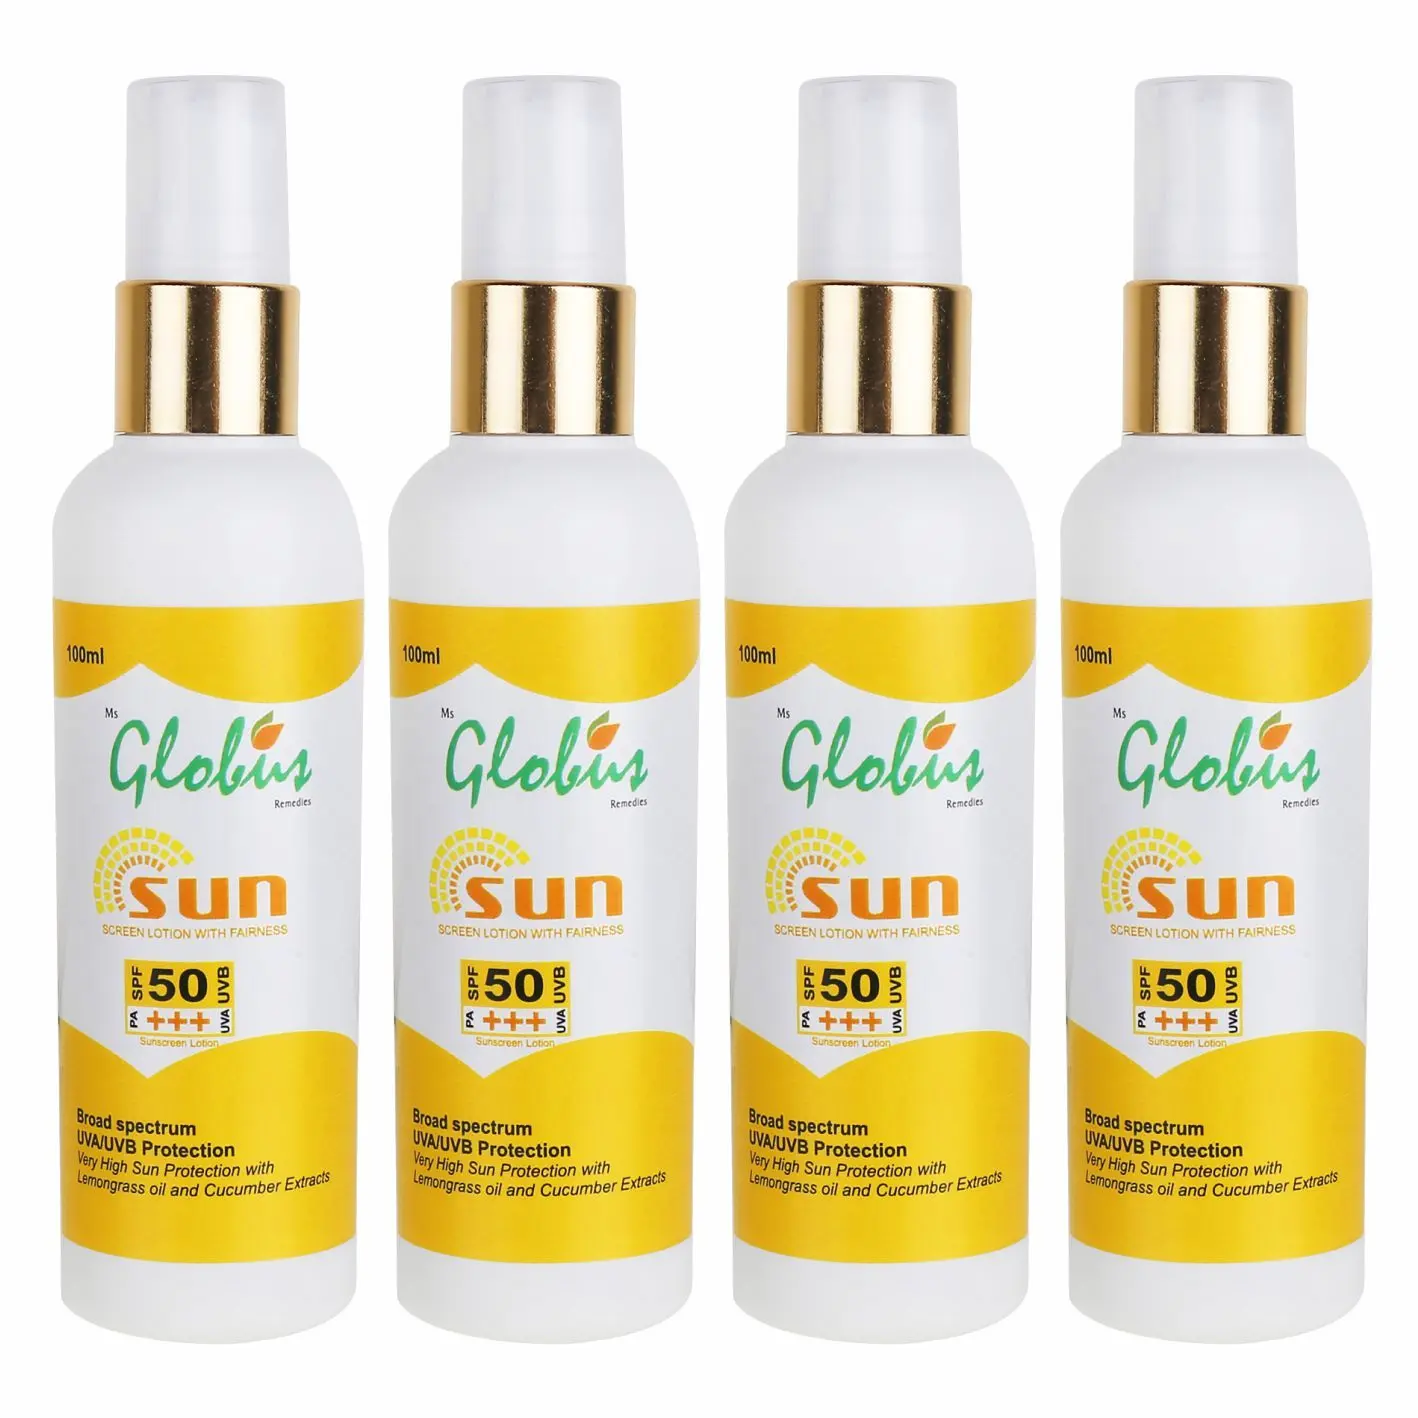 Globus Ayurvedic Sunscreen Lotion Spf 50 Pa+++ 100 ml (Pack of 4)